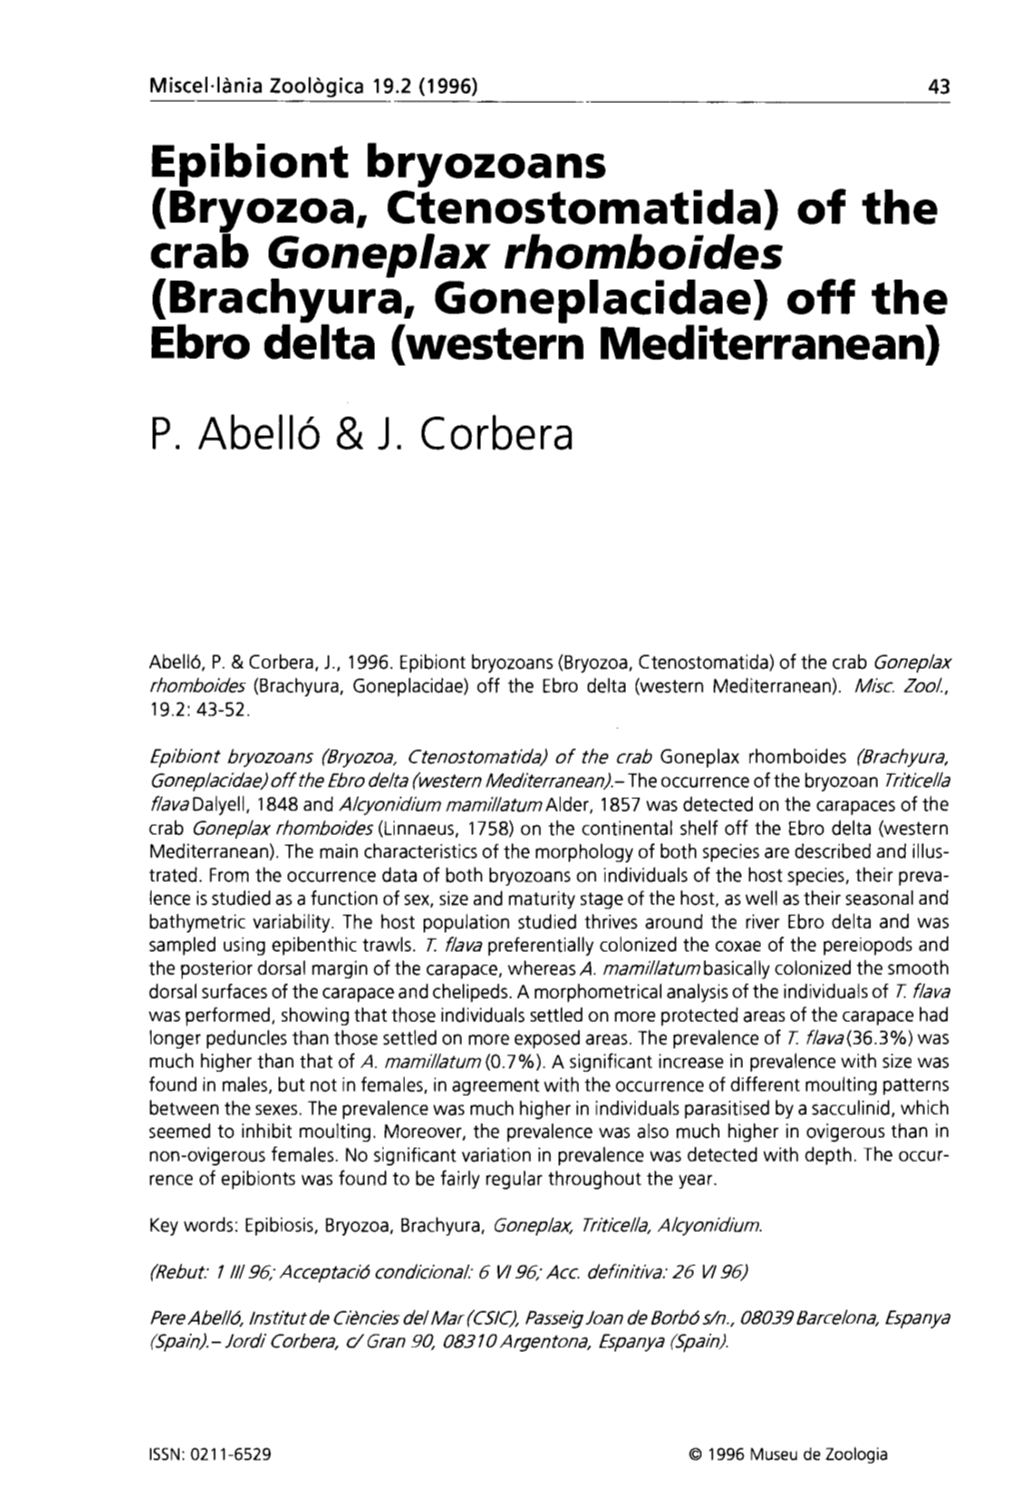 Epibiont Bryozoans (Bryozoa, Ctenostomatida) of the Crab Goneplax Rhomboides (Brachyura, Goneplacidae) Off the Ebro Delta (Western Mediterranean) P